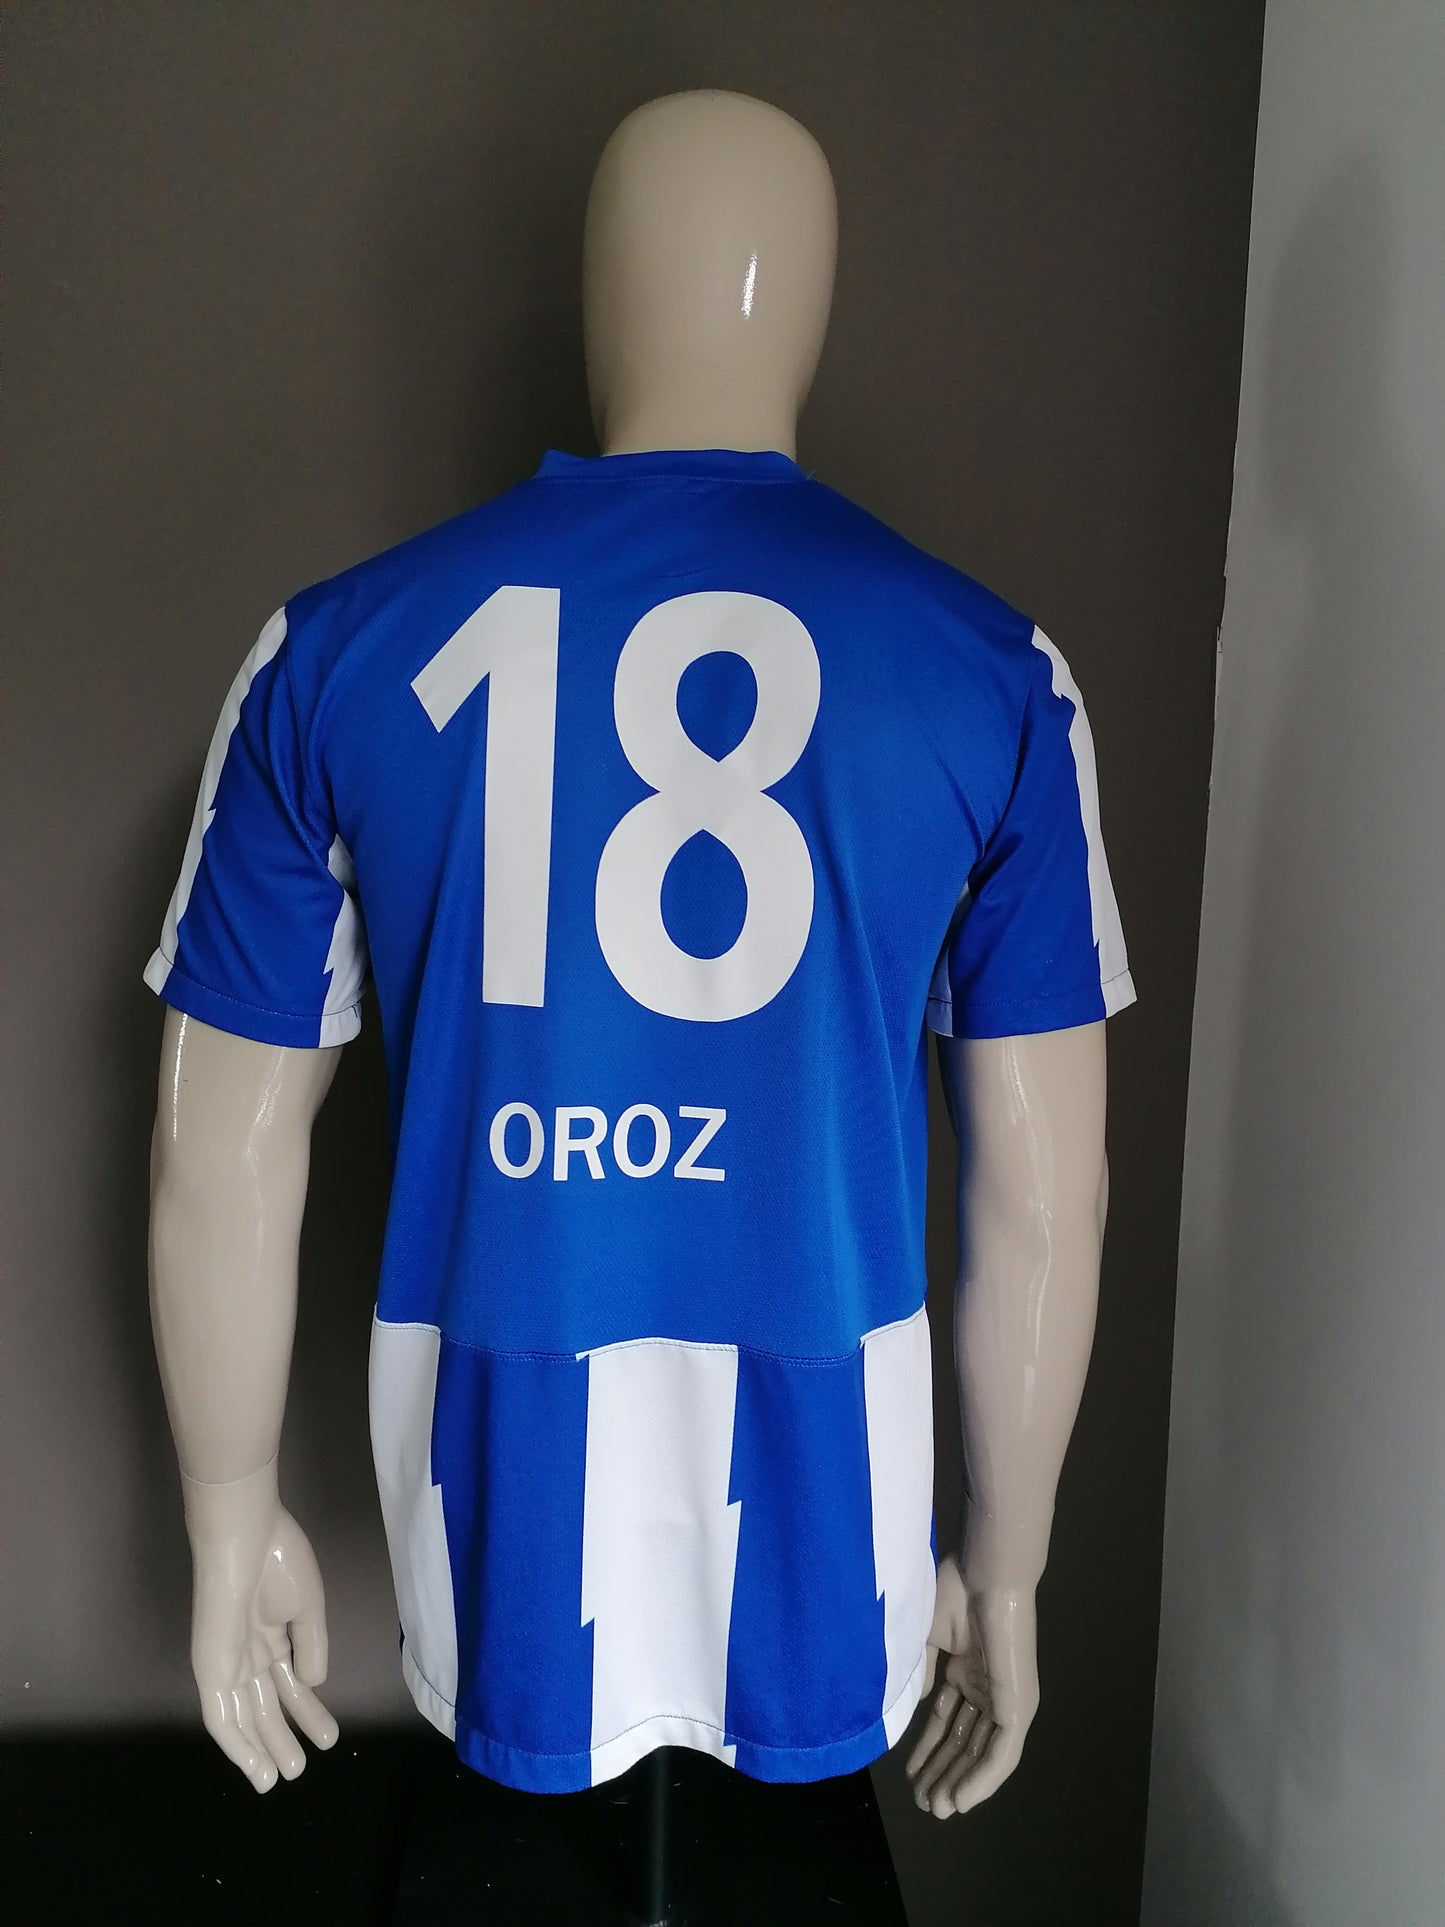 Nike voetbal sport shirt "Oroz". Blauw Wit motief. Maat L.